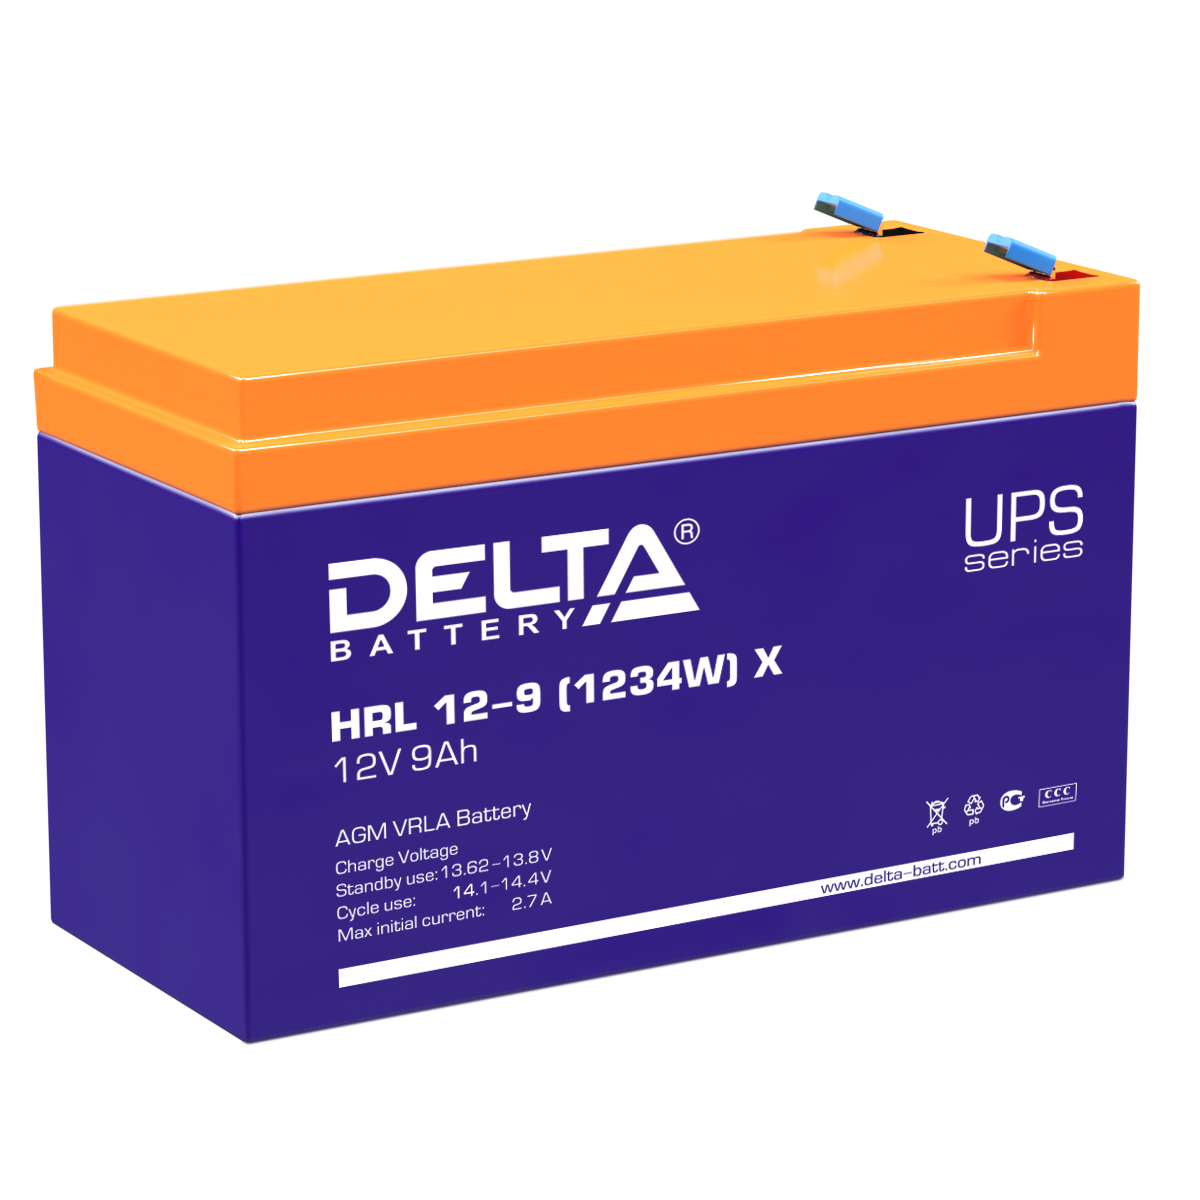 Delta HRL 12-9 (1234W) X 